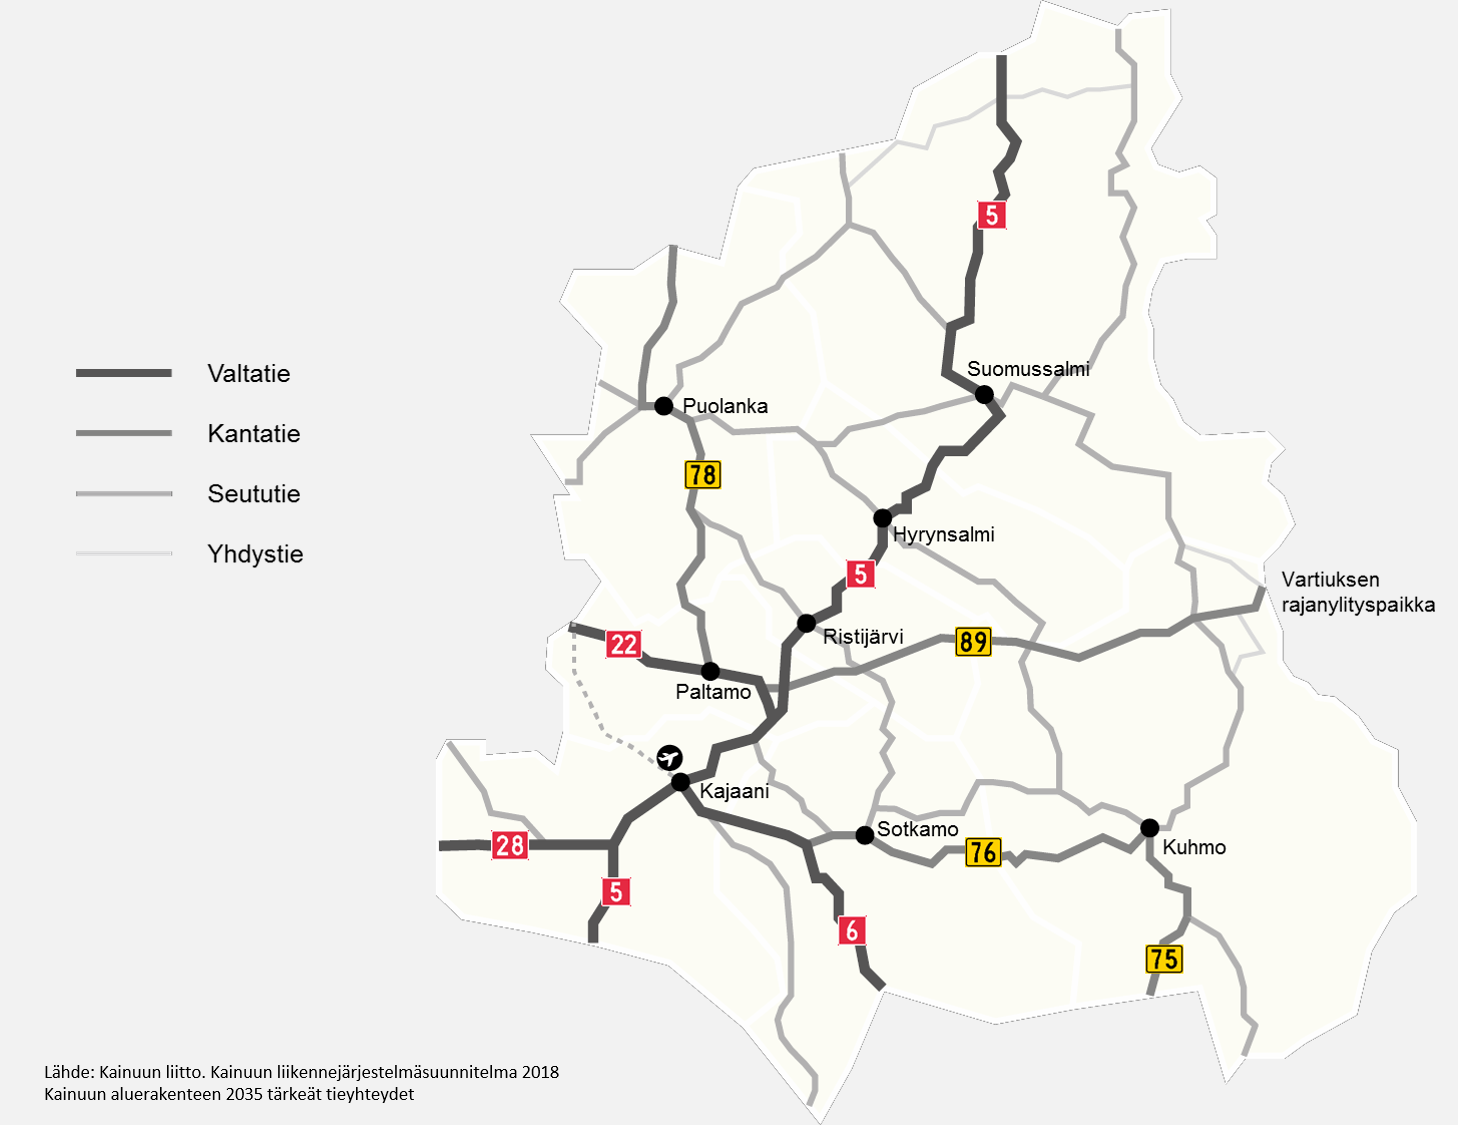 Road network in Kainuu (Sourcee: Regional Council of Kainuu)